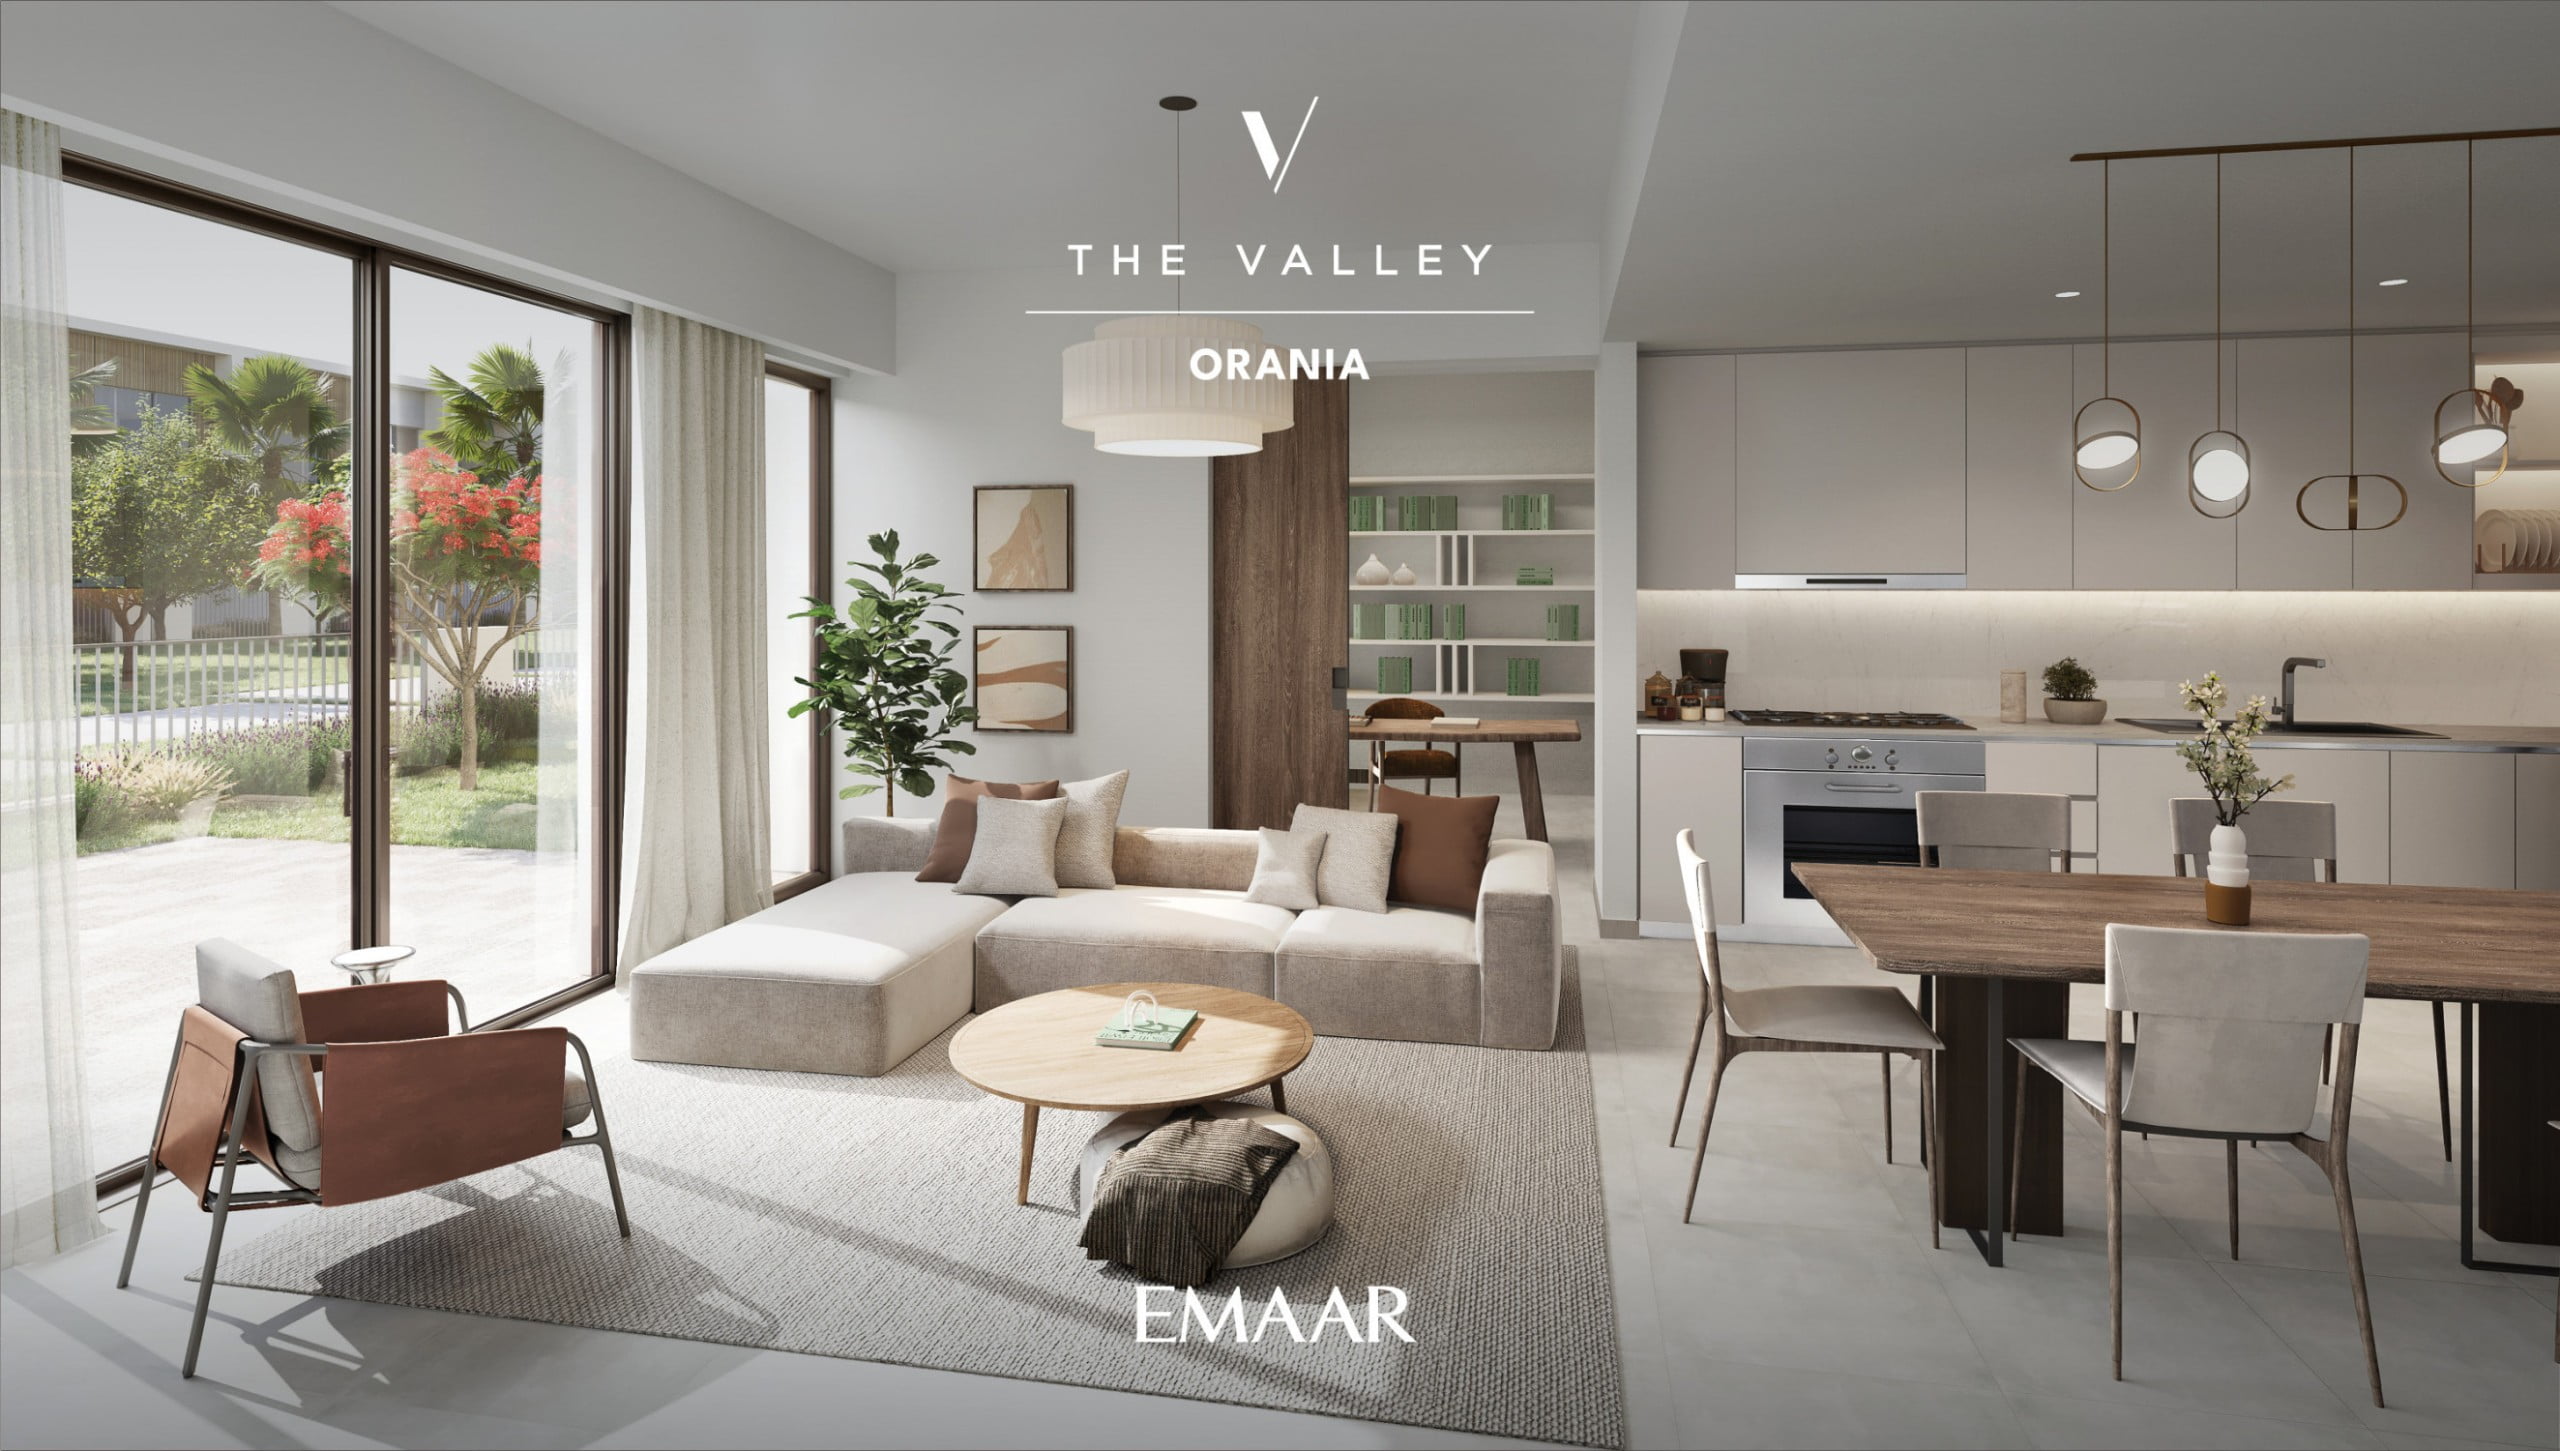 ORANIA THE VALLEY EMAAR 14 scaled - Immobilier Dubai